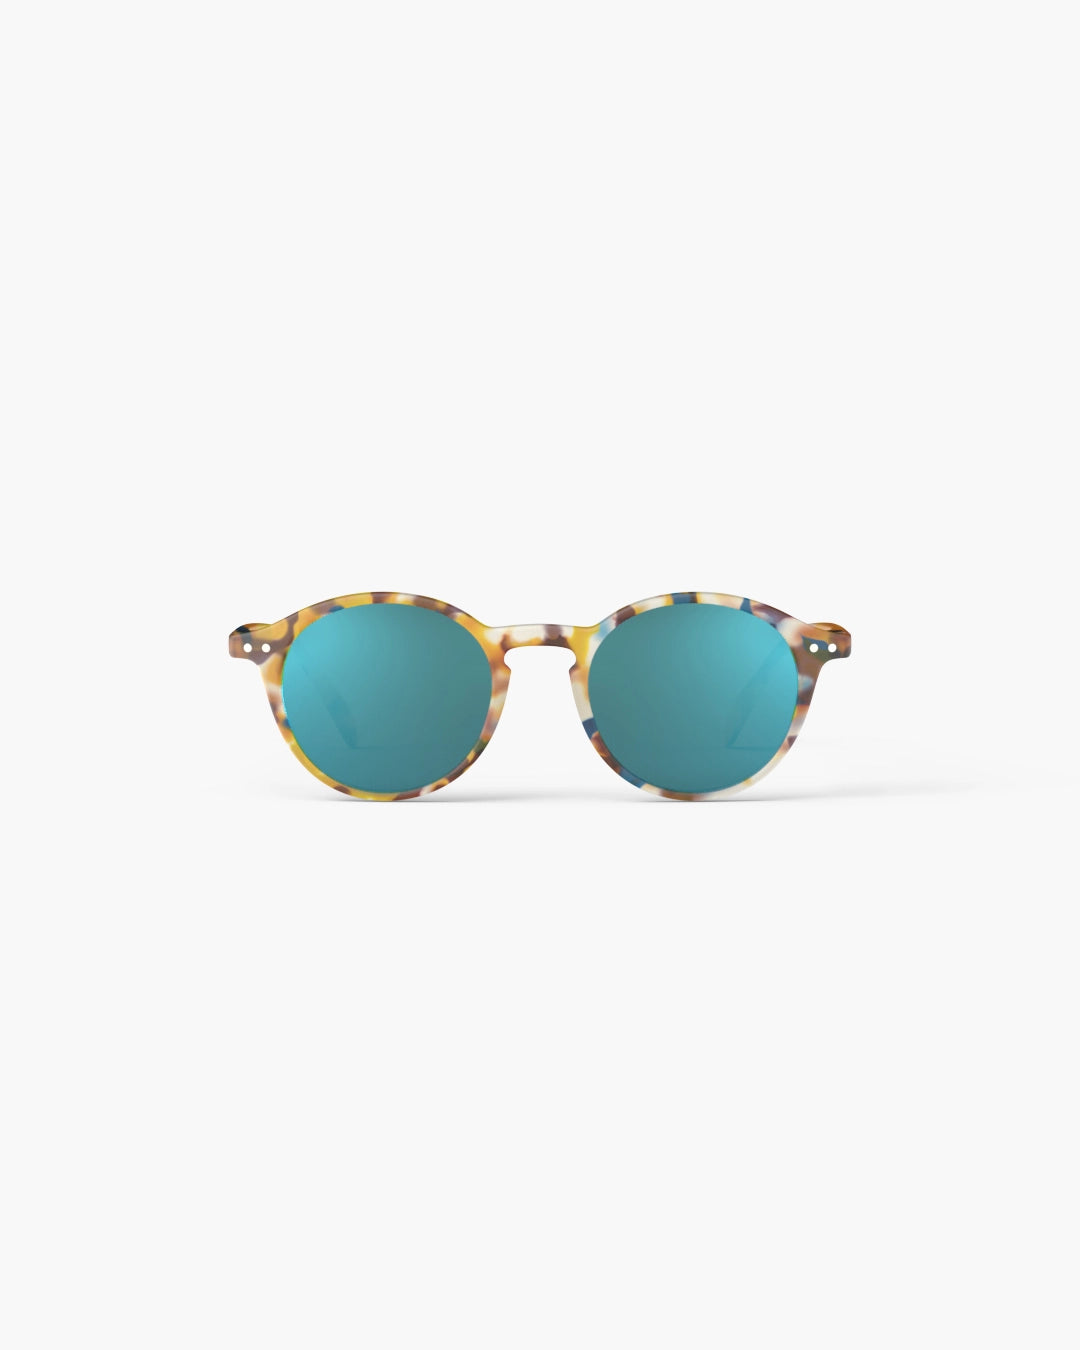 lunettes de soleil junior #H sun blue tortoise mirror - IZIPIZI slmshc30 3701210401690